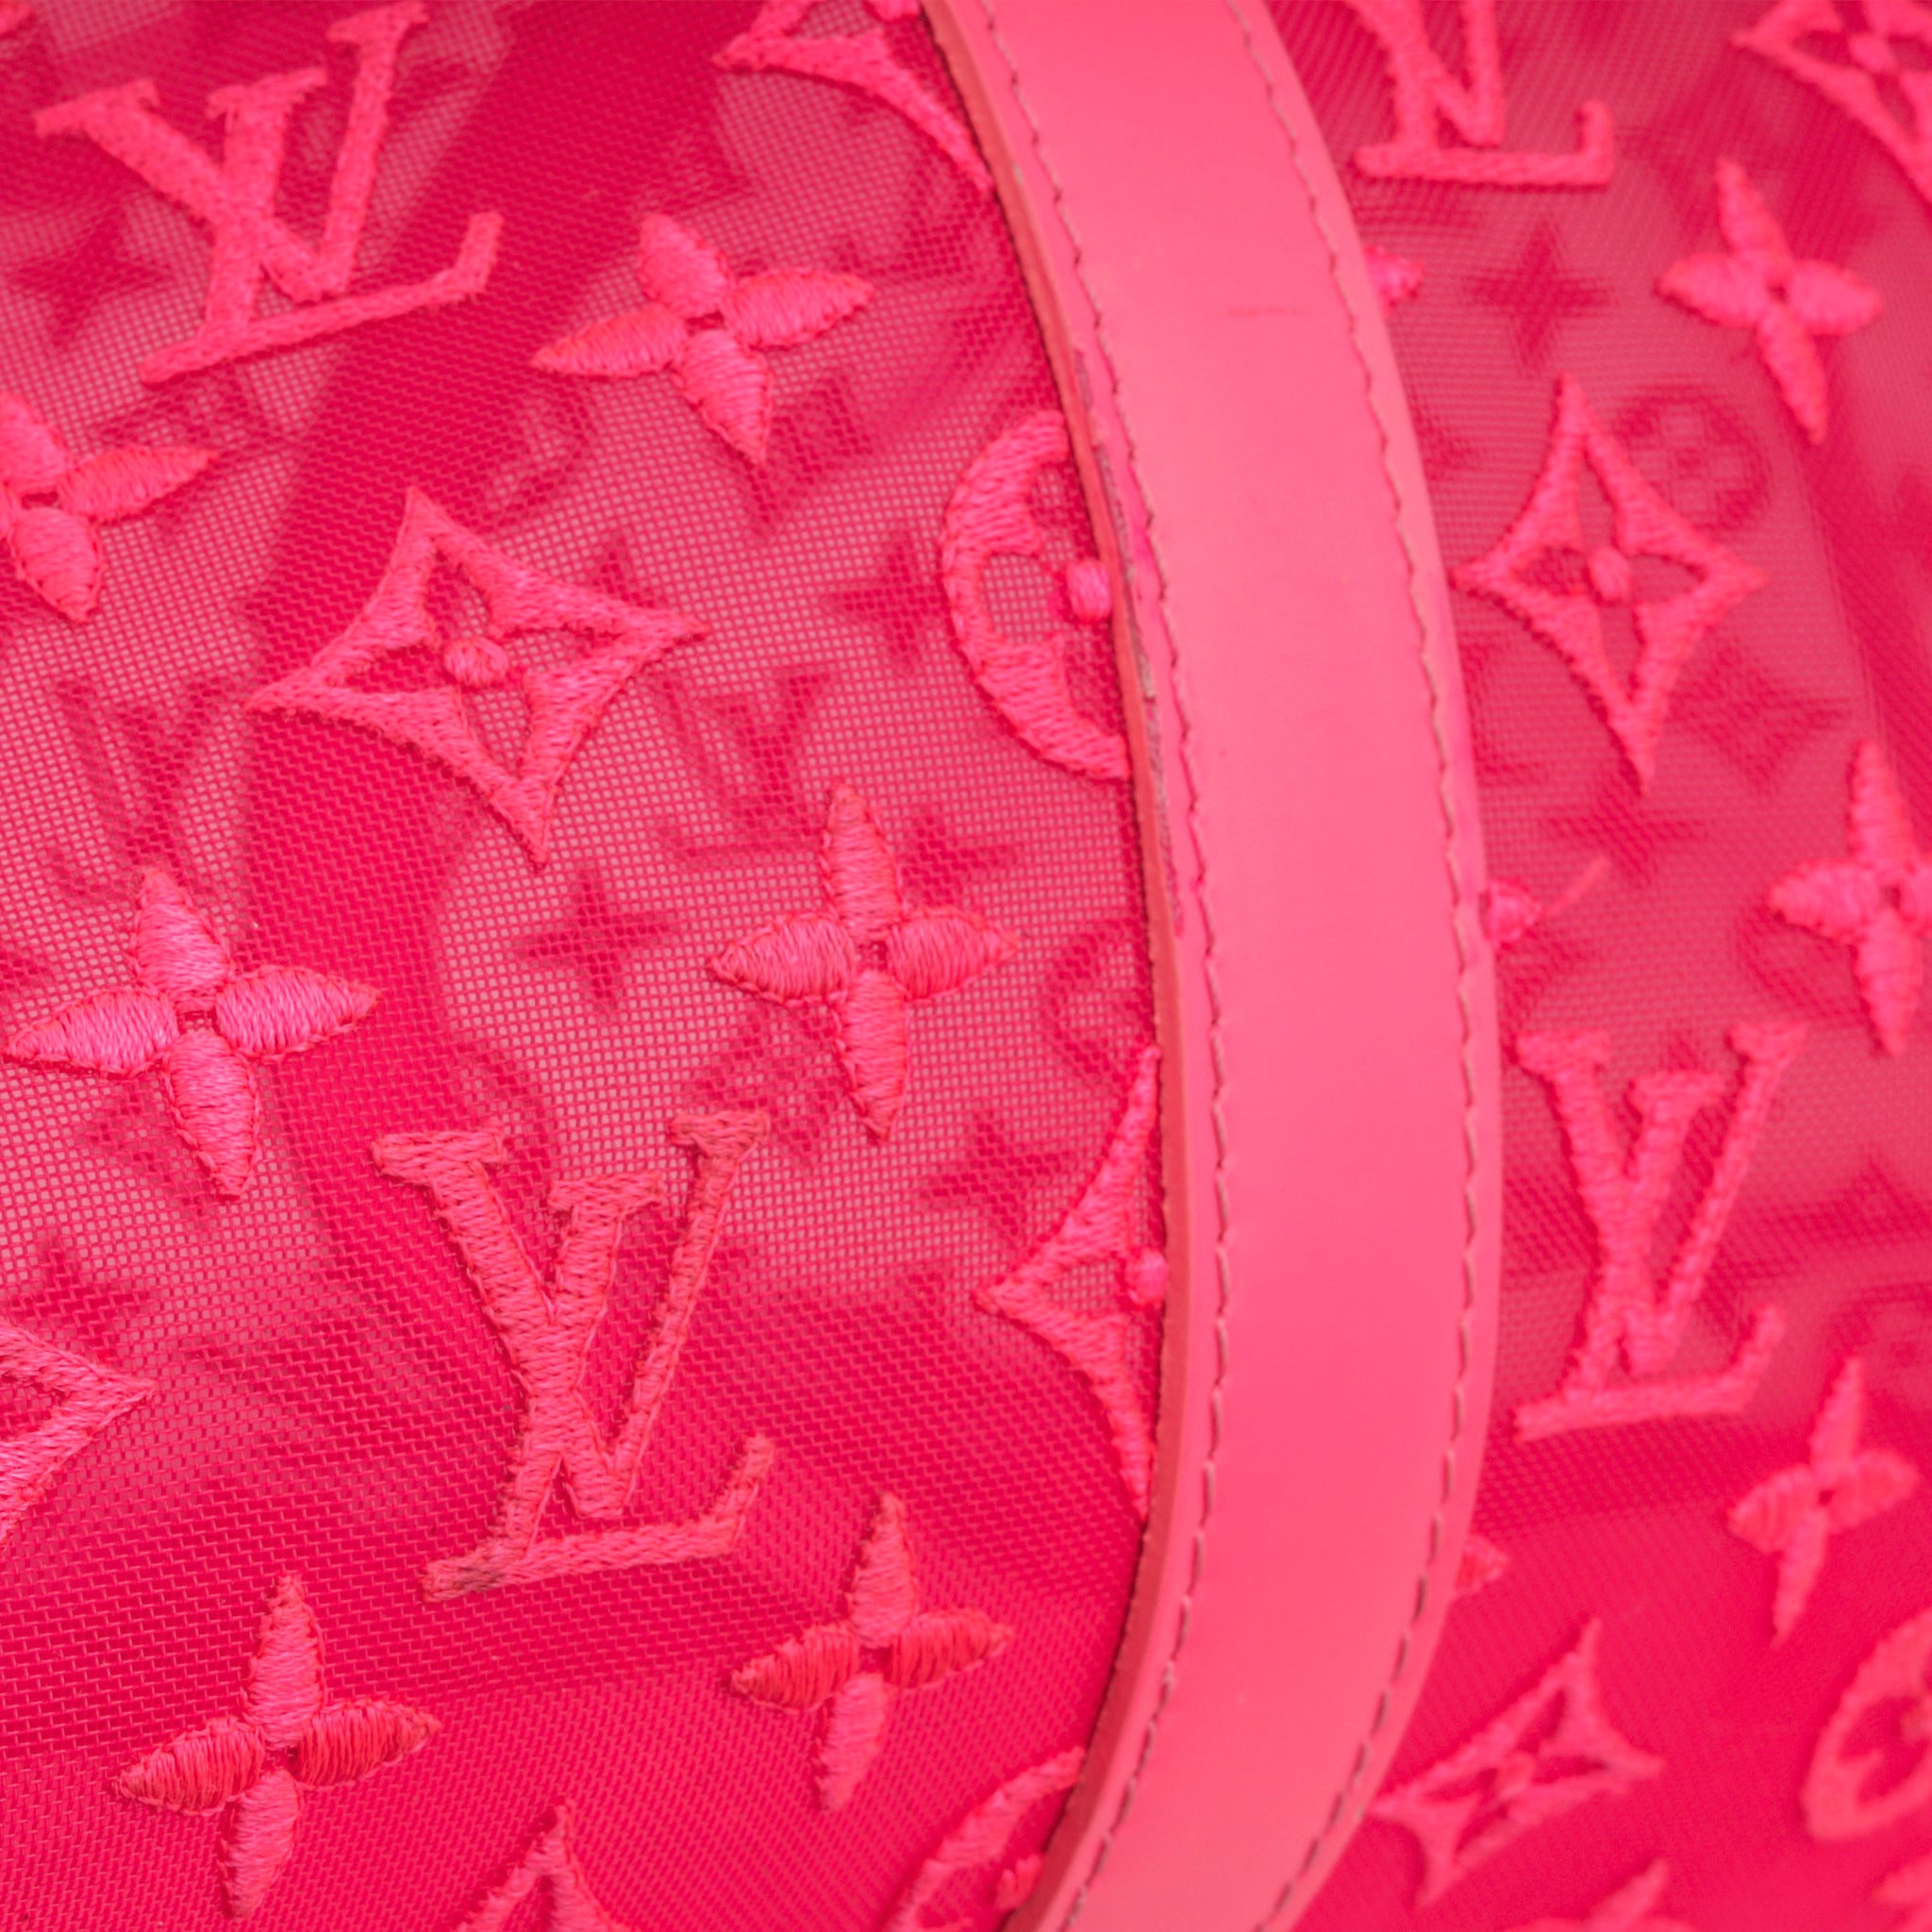 Louis Vuitton Keepall Bandouliere Monogram Mesh 50 Pink